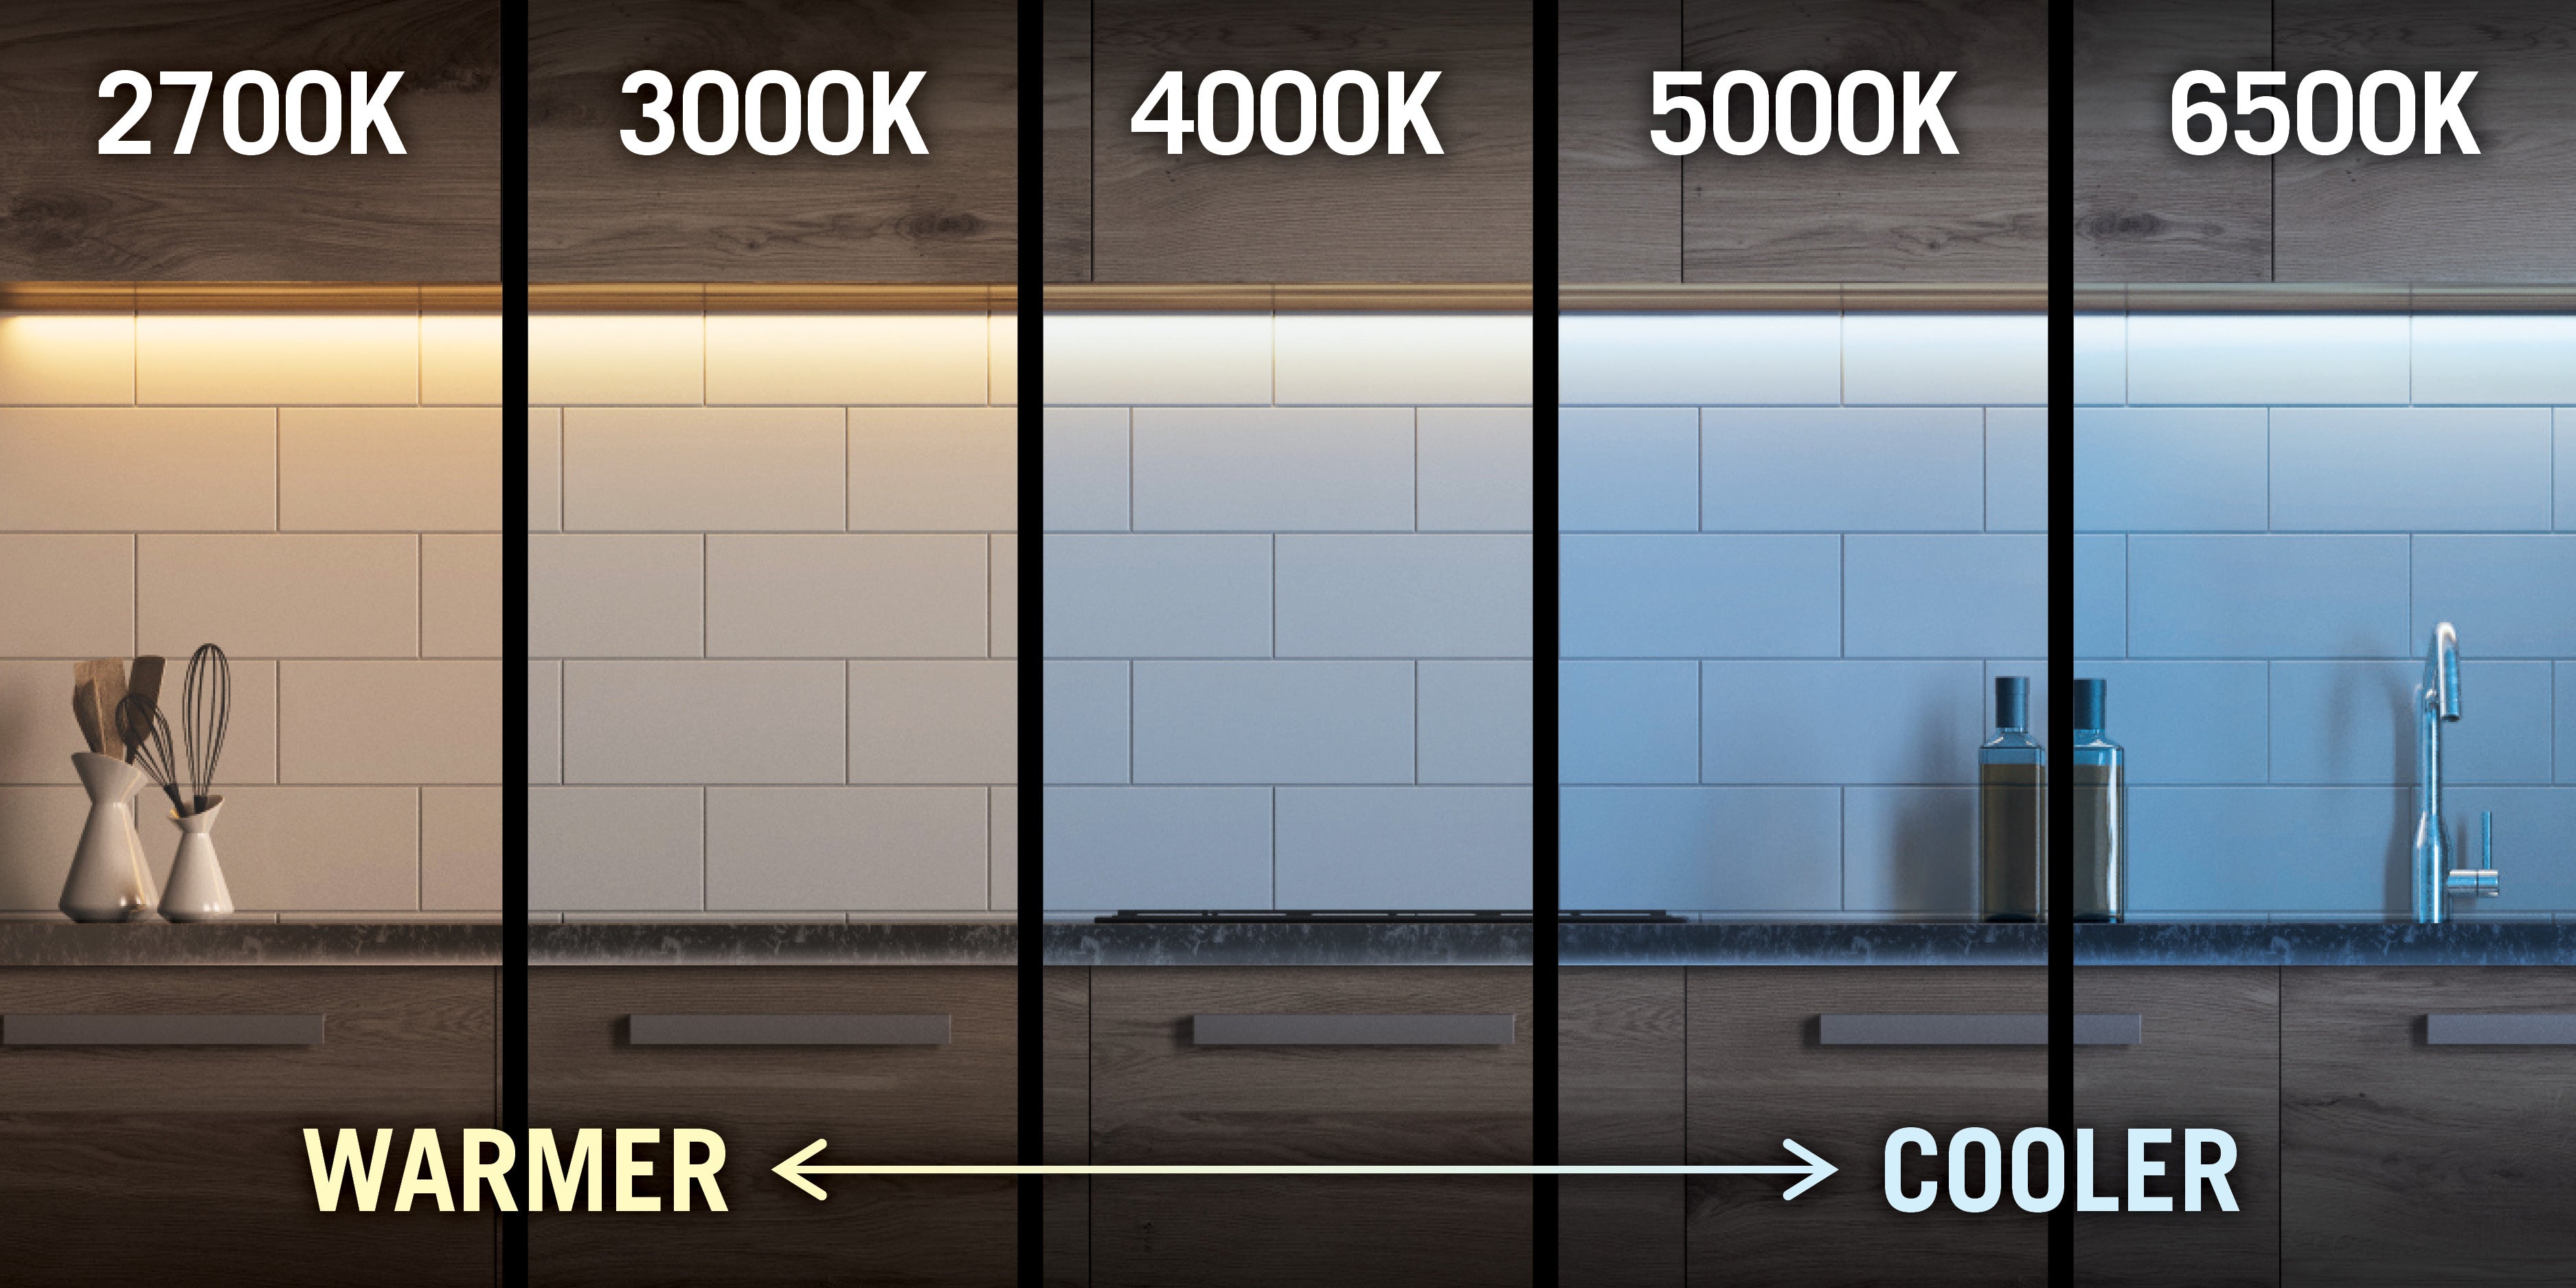 2700K, 3000K, 4000K, 5000K and 6500K light comparison